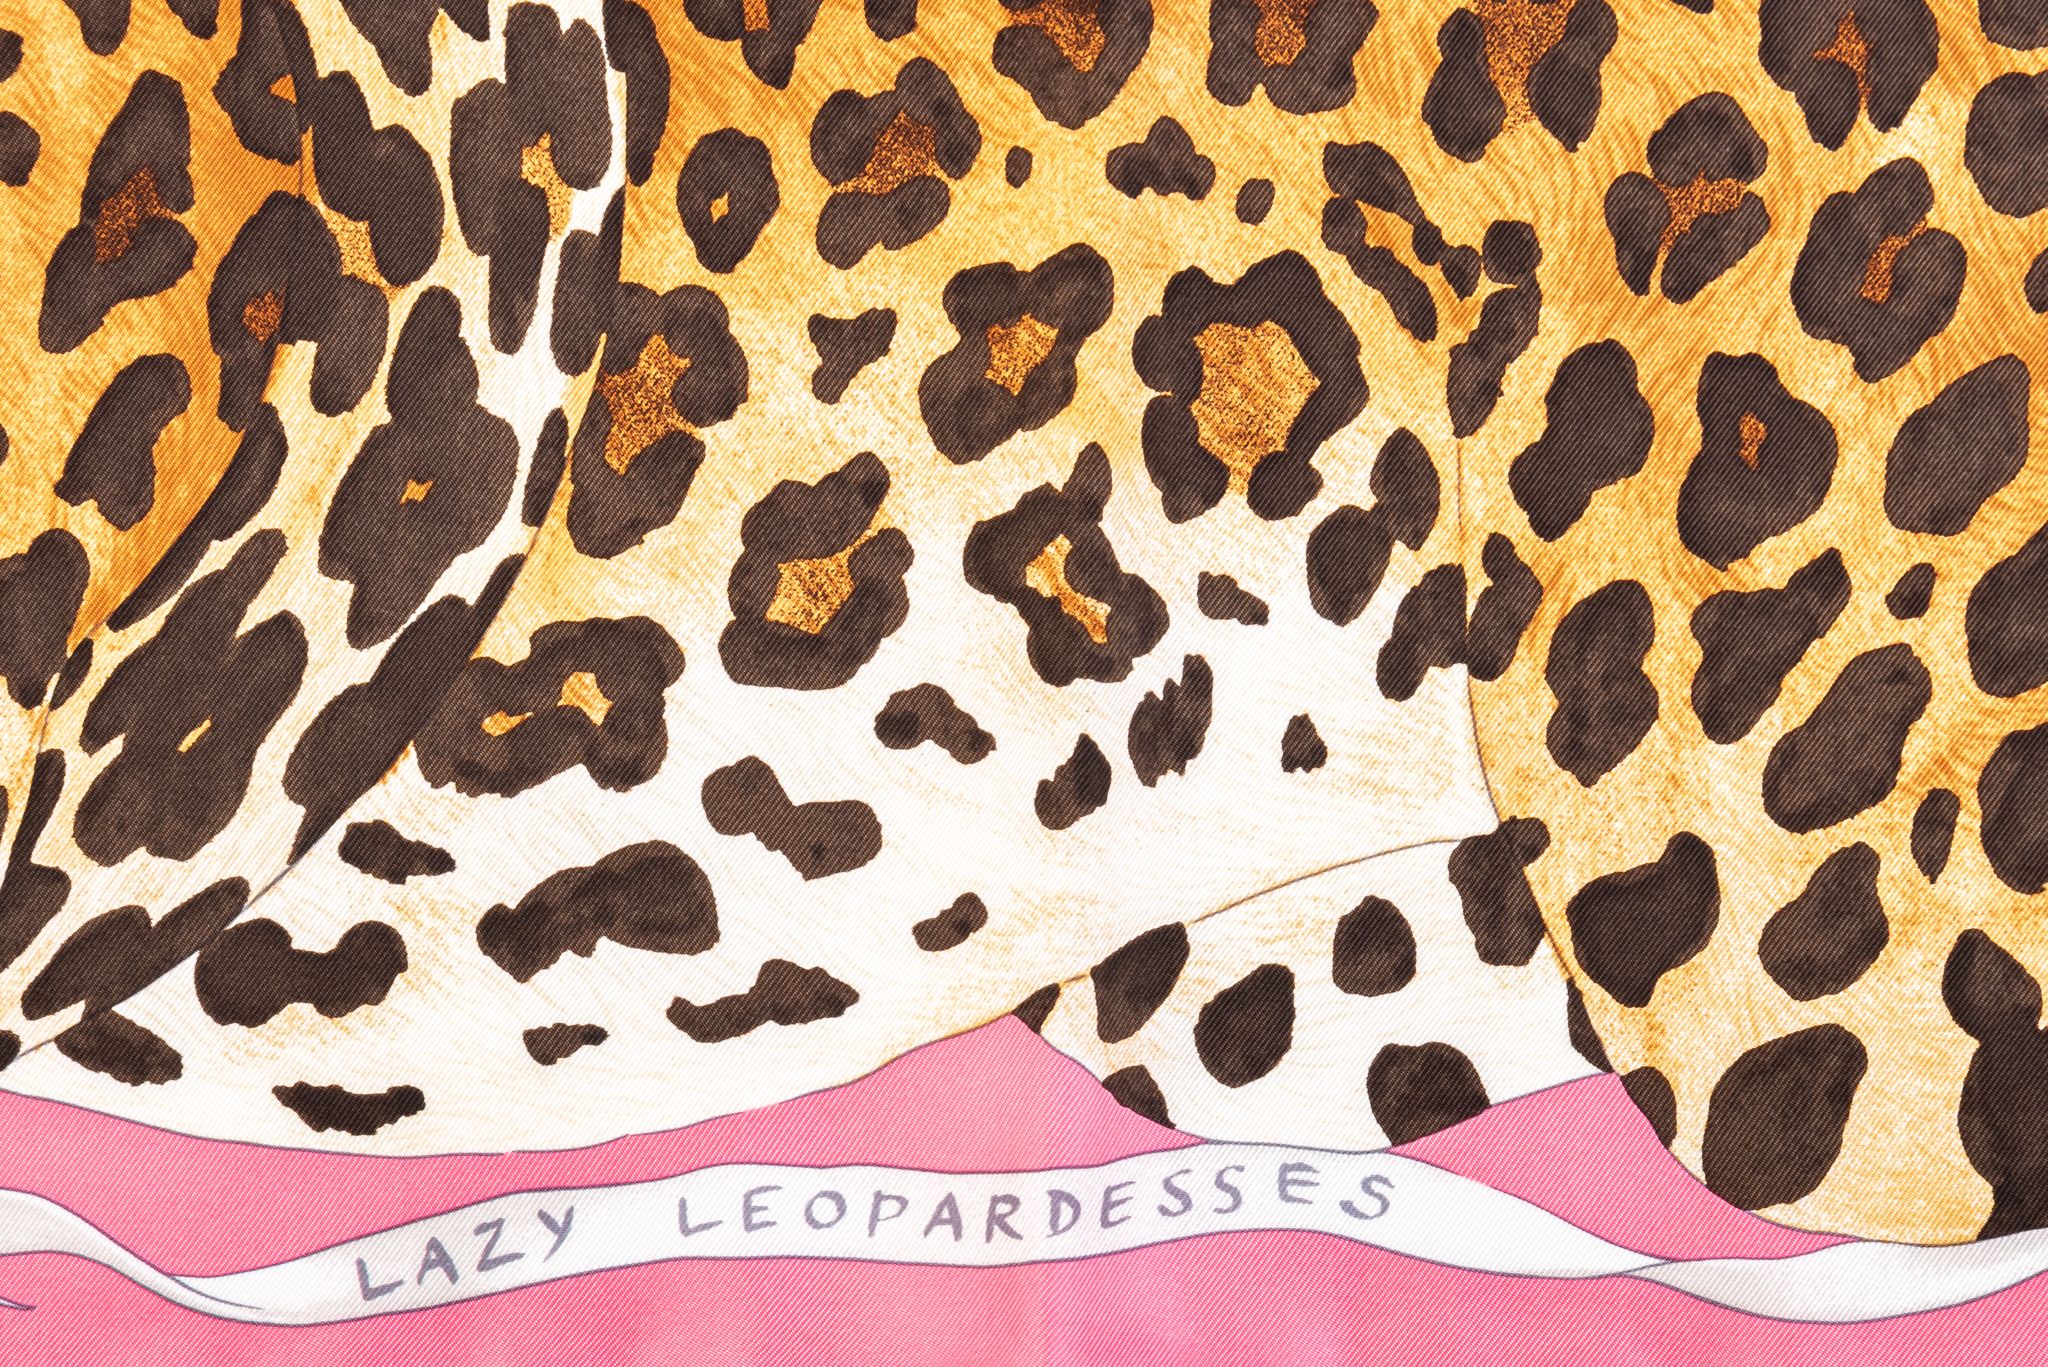 Hermès Silk Scarf « Lazy Leopardesses » by Arlette Ess. – Hermes Emporium